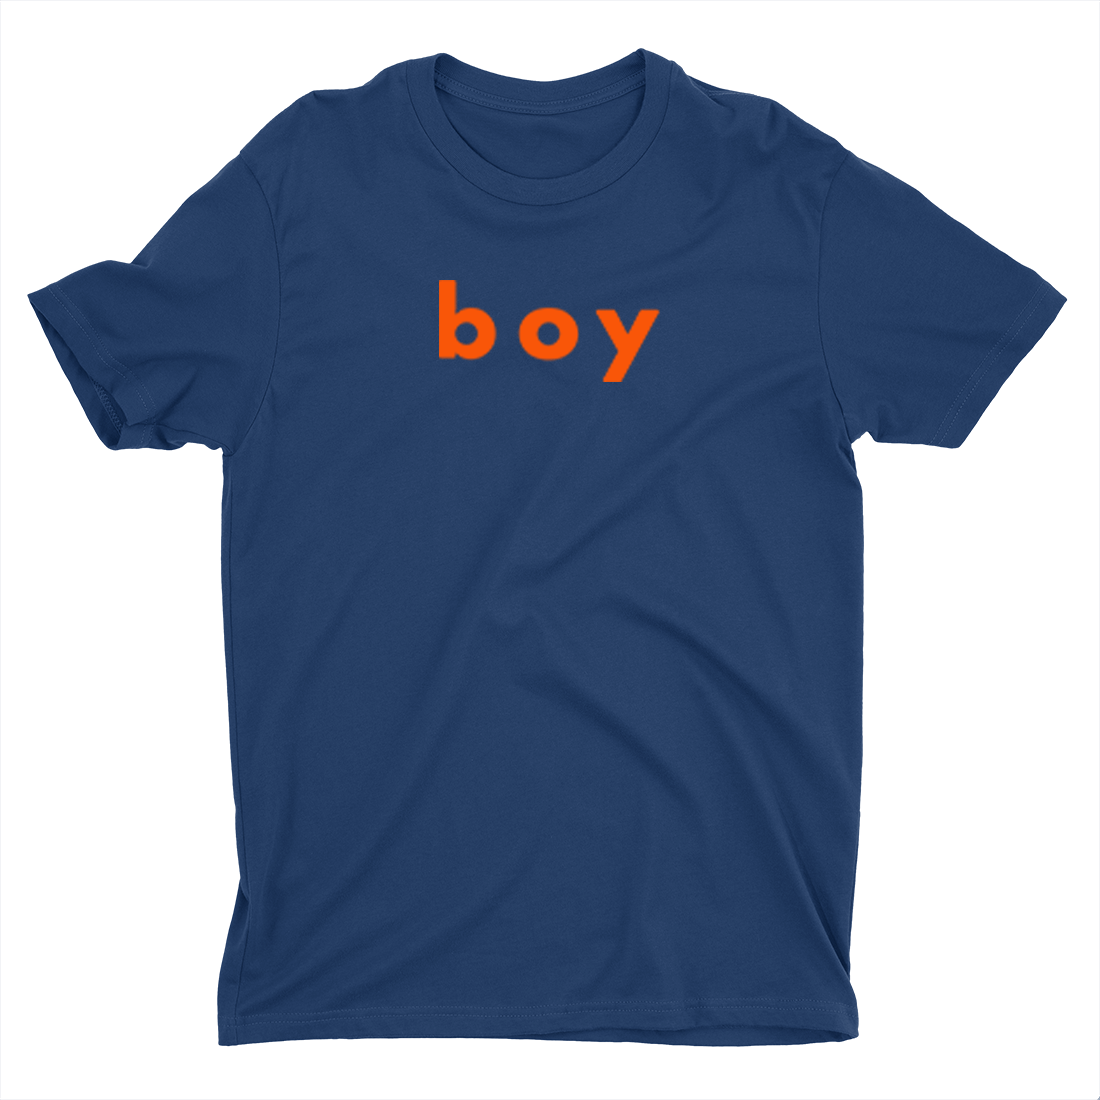 The Killers - Blue "boy" T-Shirt